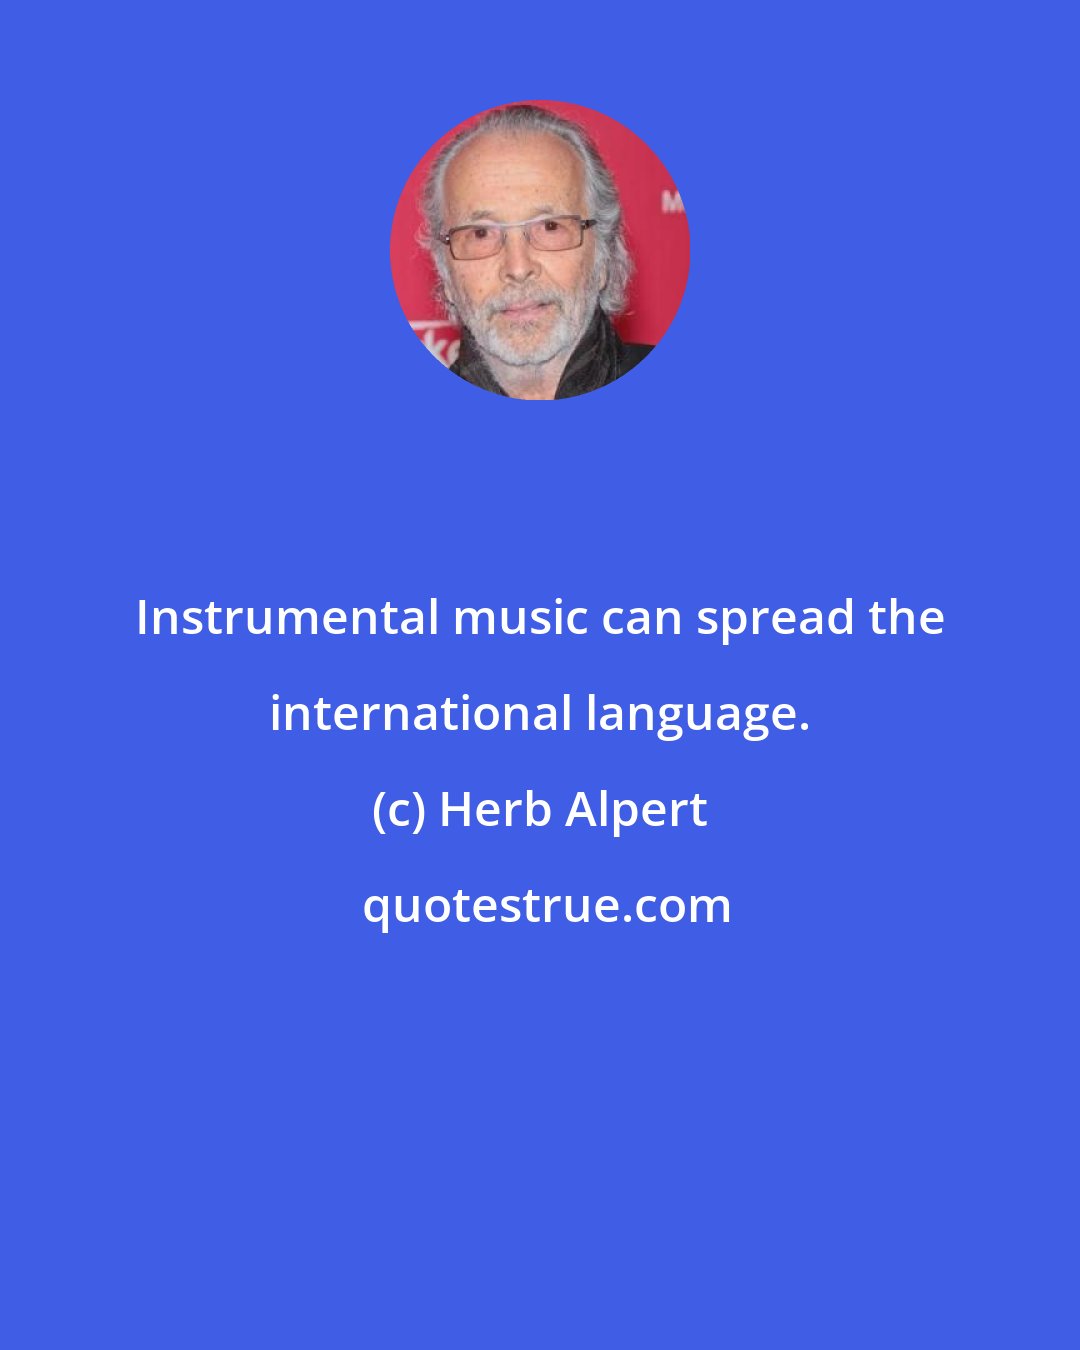 Herb Alpert: Instrumental music can spread the international language.